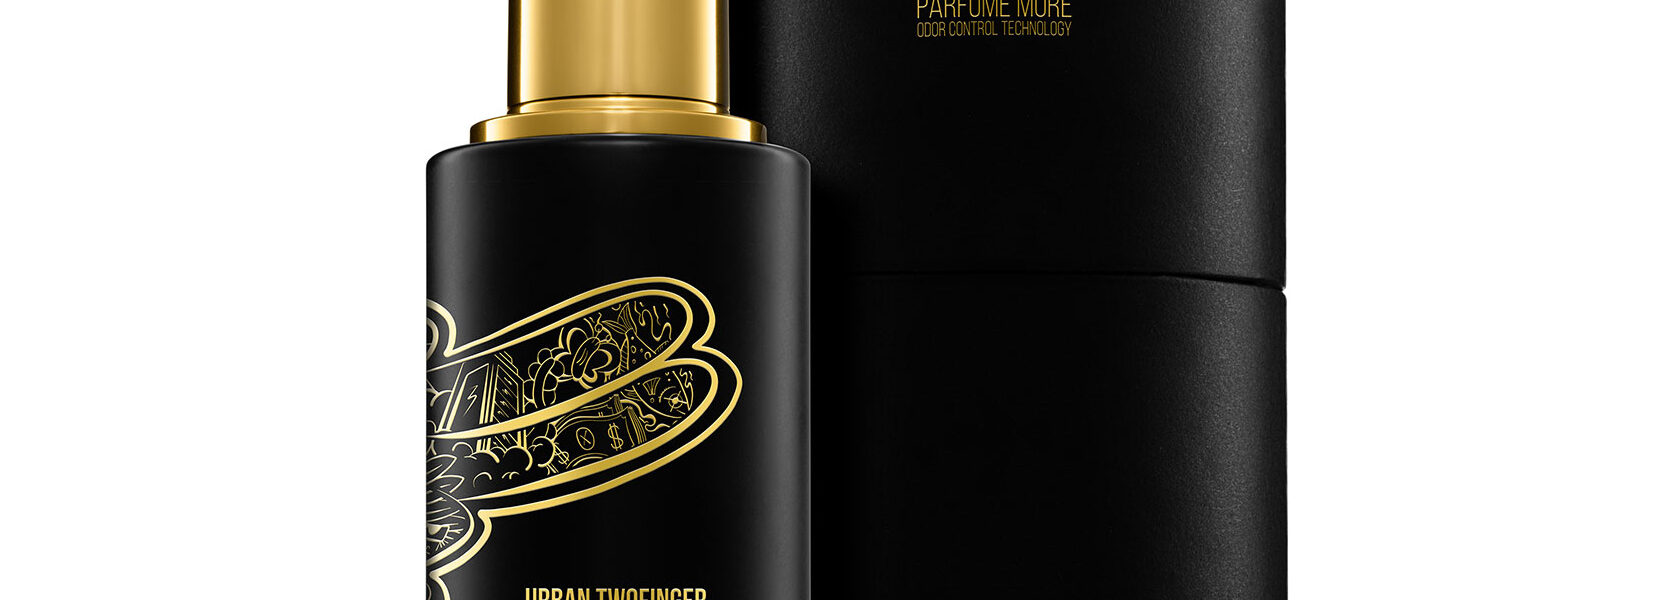 Pánsky parfum Angry Beards Urban Twofinger – 100 ml (PARFUME-TWOFINGER-100) + DARČEK ZADARMO